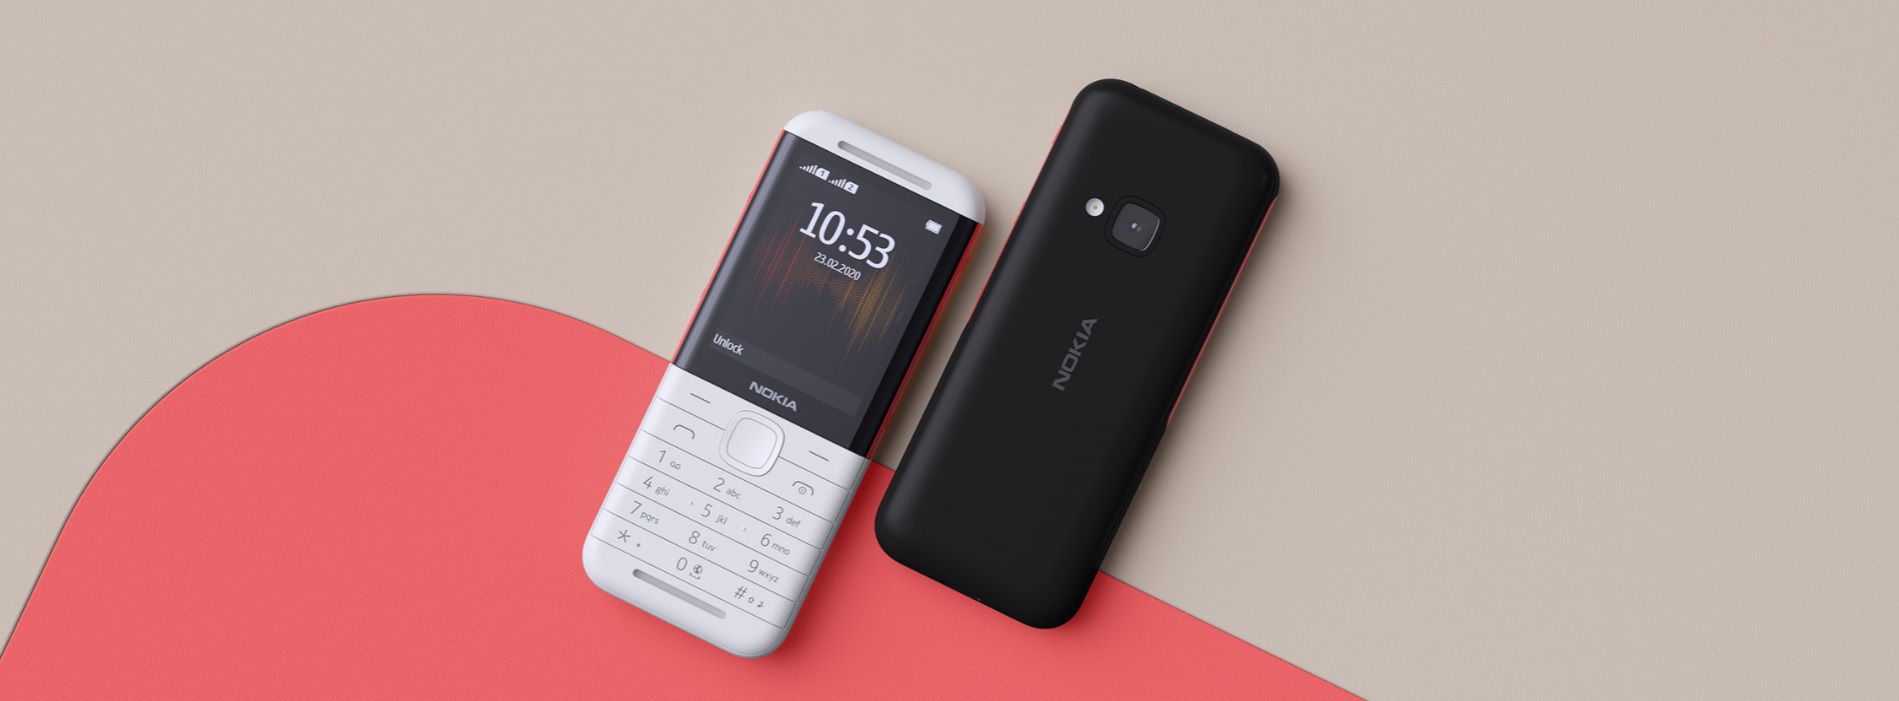 Nokia 5310 feature phone